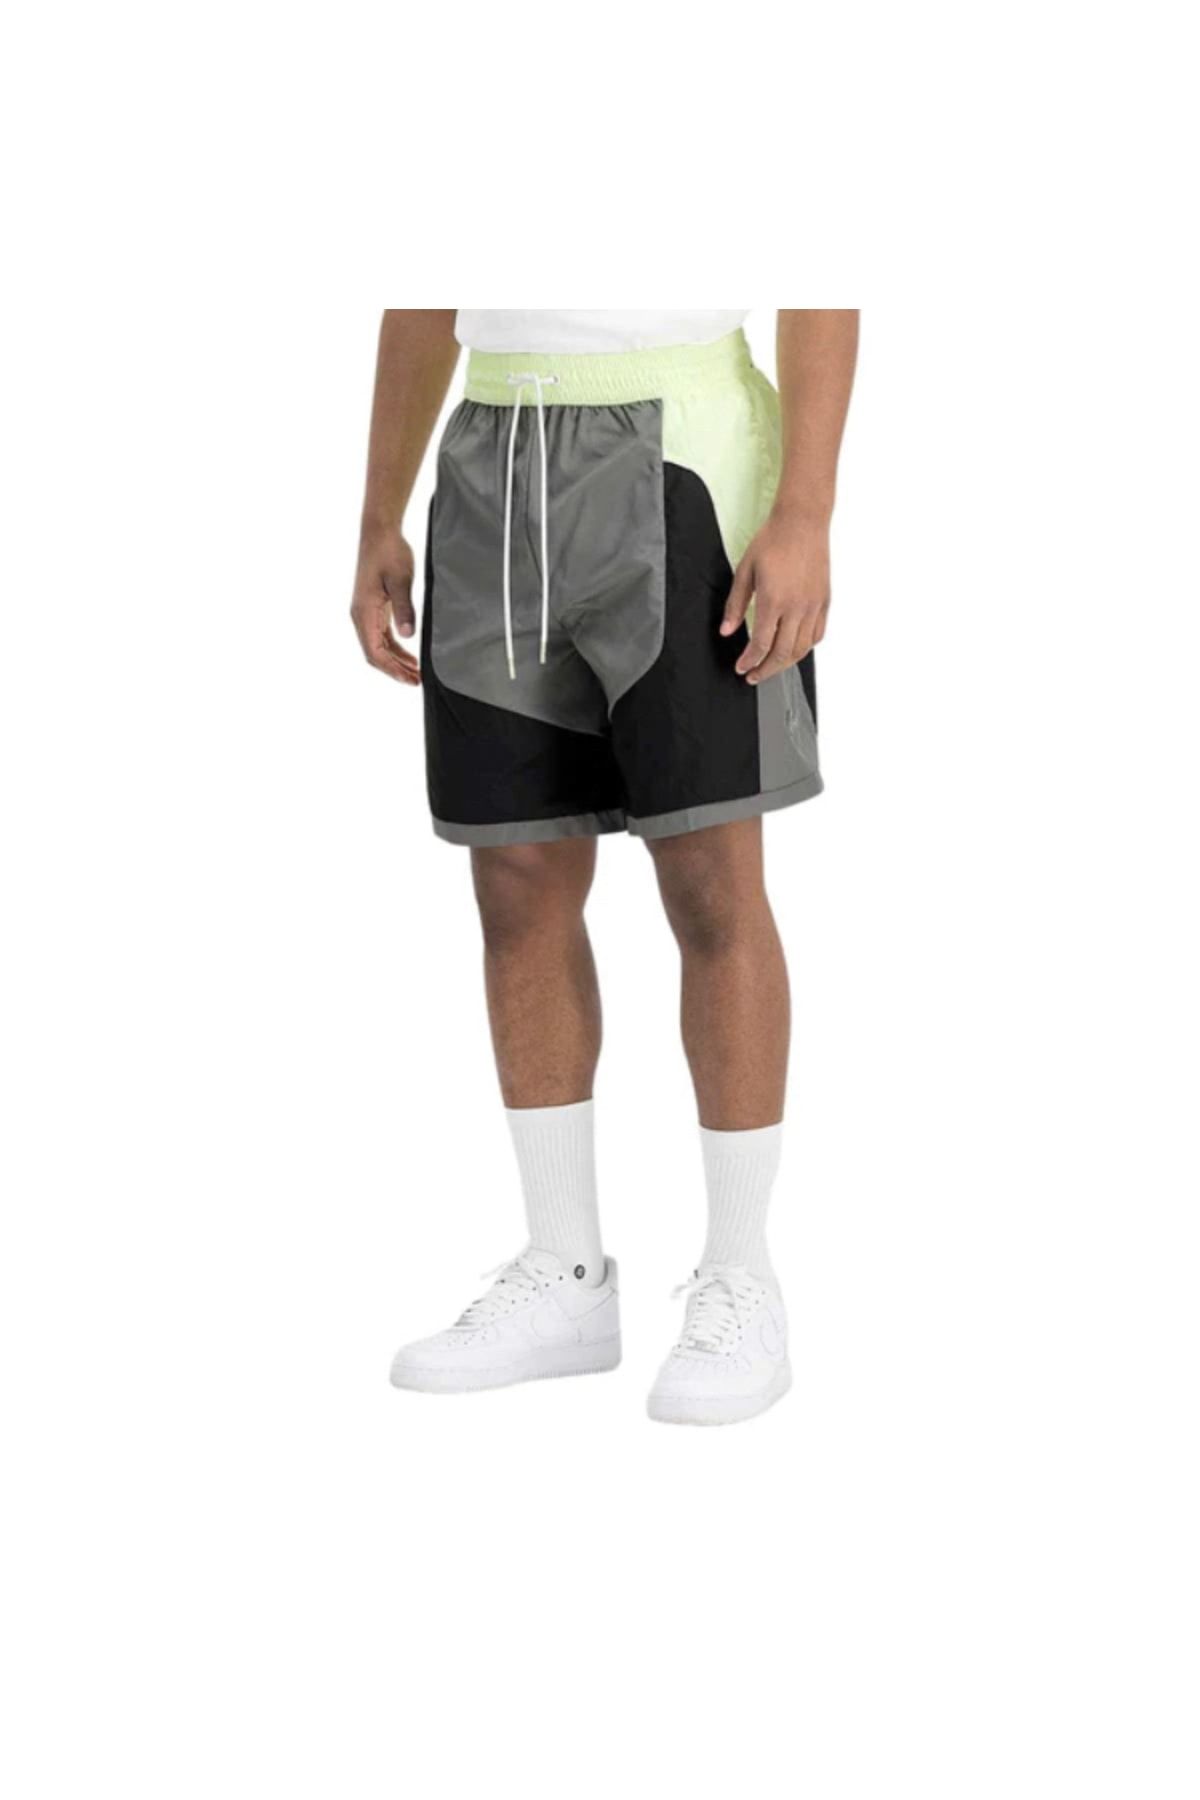 Nike Sports Shorts - Gray - Normal Waist